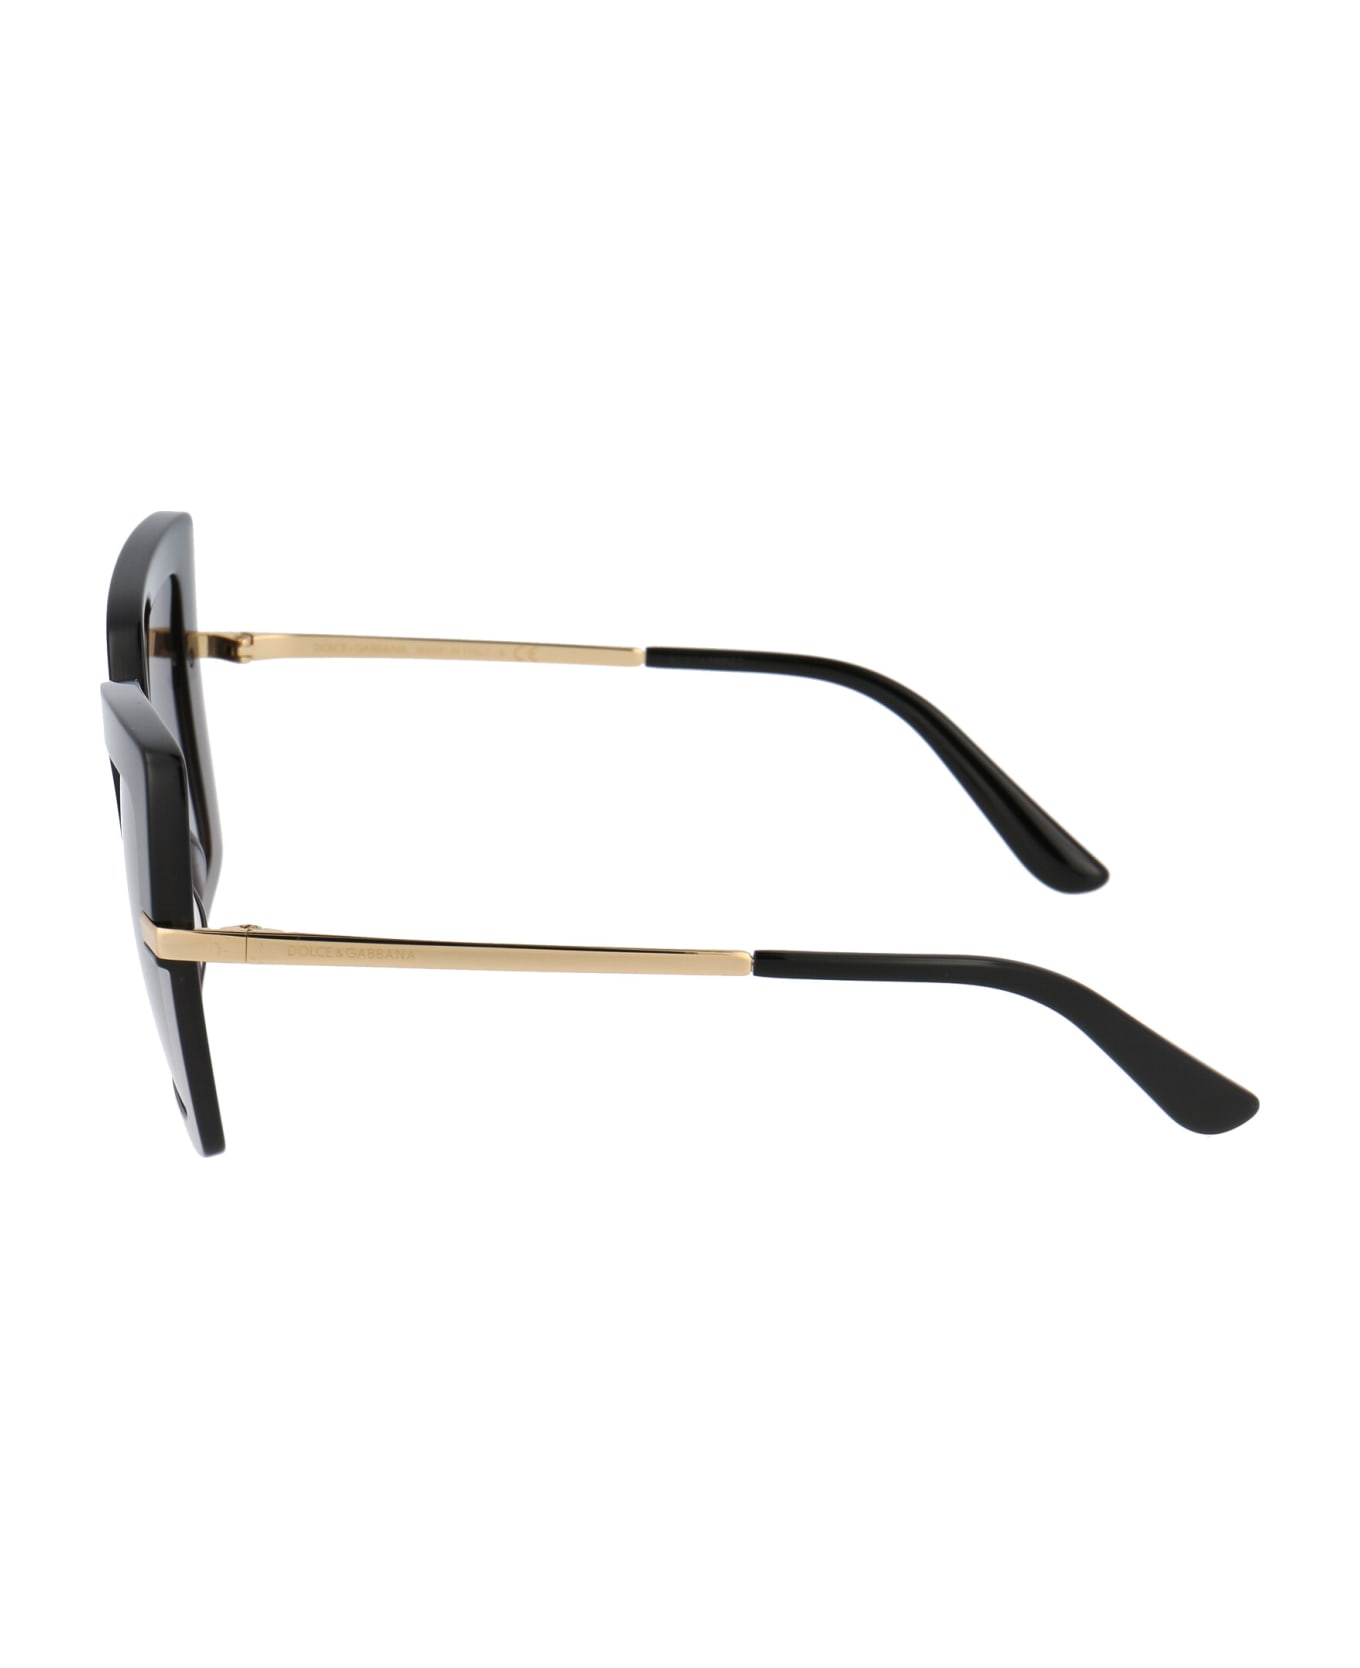 Dolce & Gabbana Eyewear 0dg4373 Sunglasses - 32468G BLACK ON TRANSPARENT BLACK